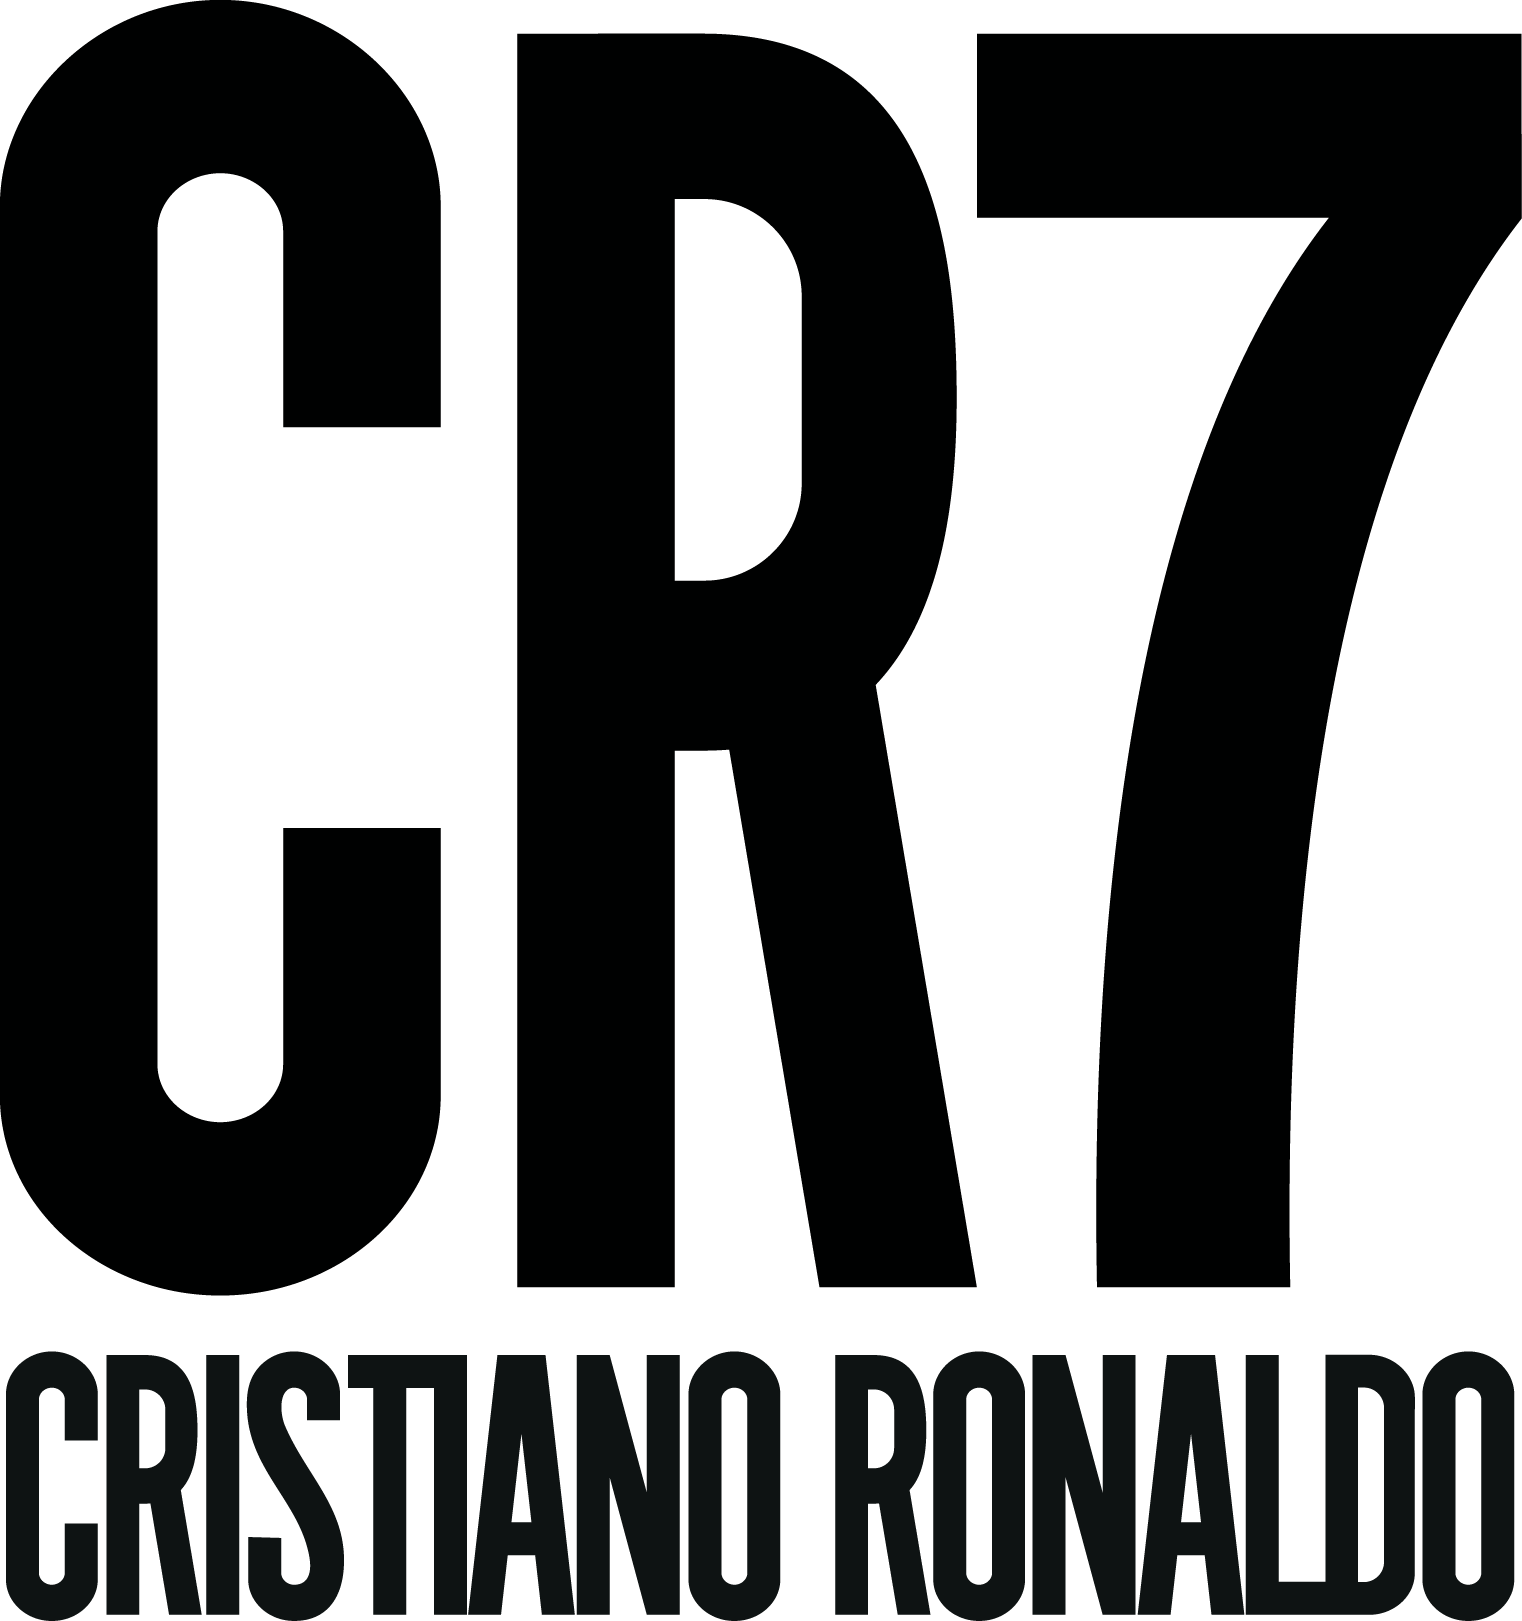 CR7 Logo (Cristiano Ronaldo) png